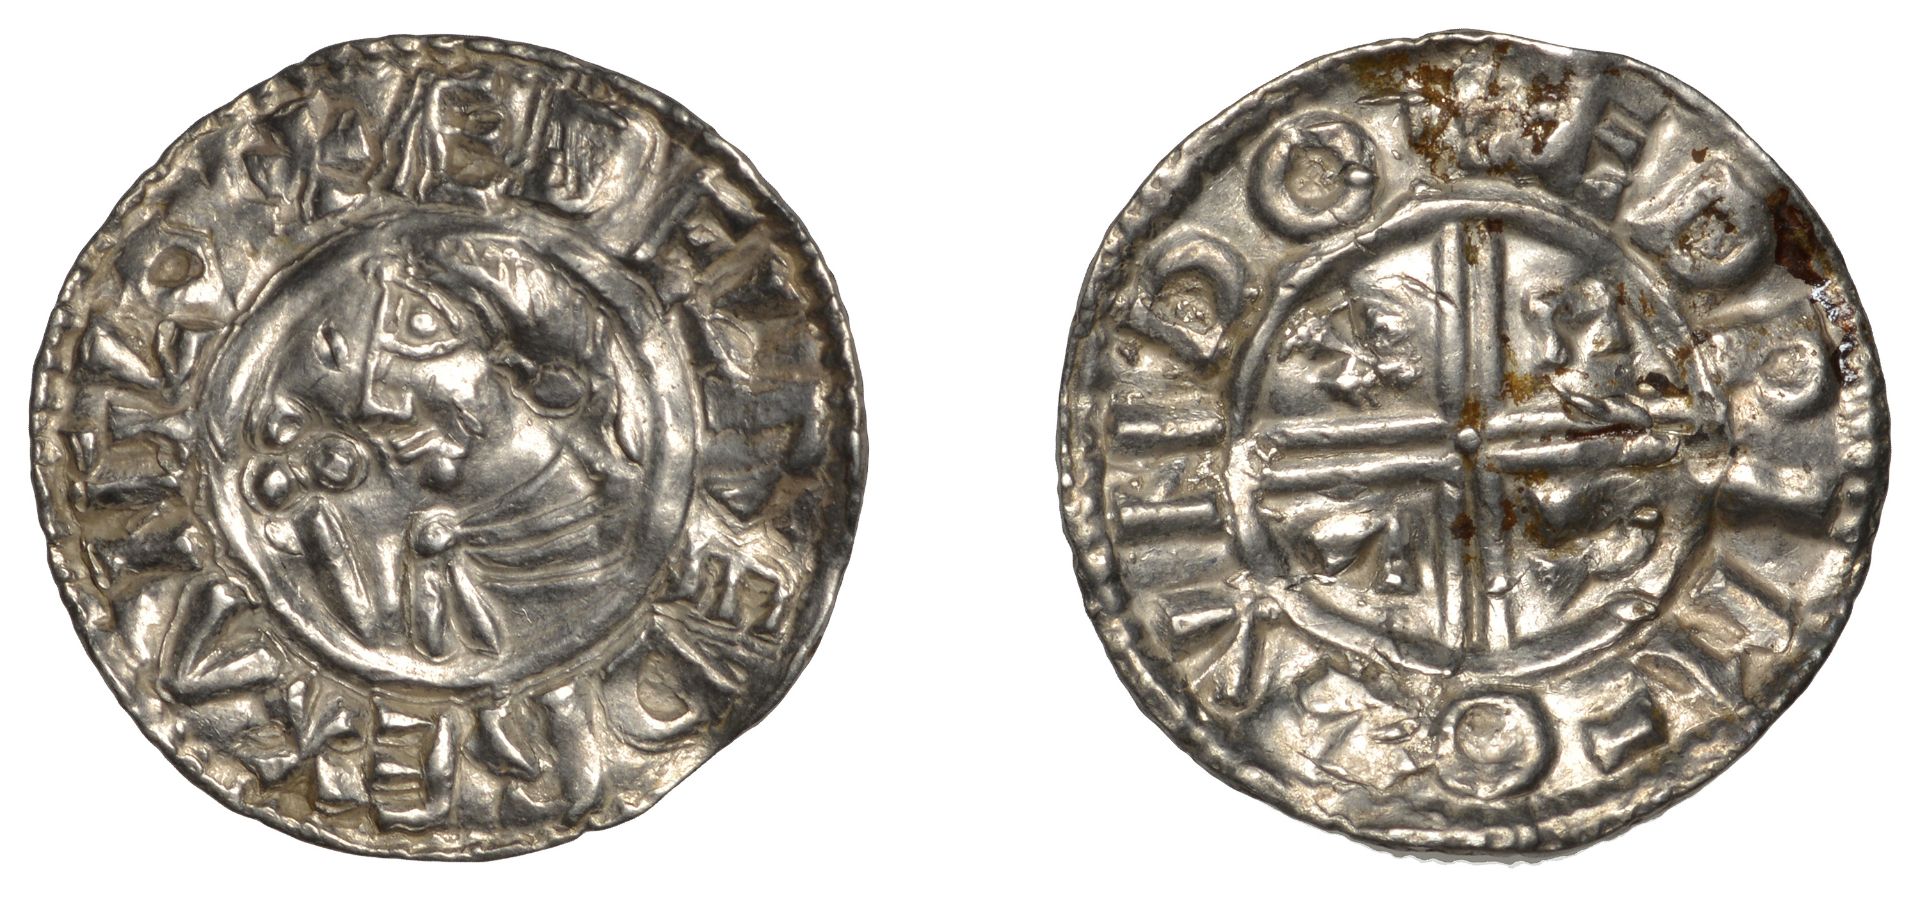 Ã†thelred II (978-1016), Penny, CRVX type, London, Eadwine, Ã¦dpi m-o lvndo, 1.41g/6h (BEH 247...